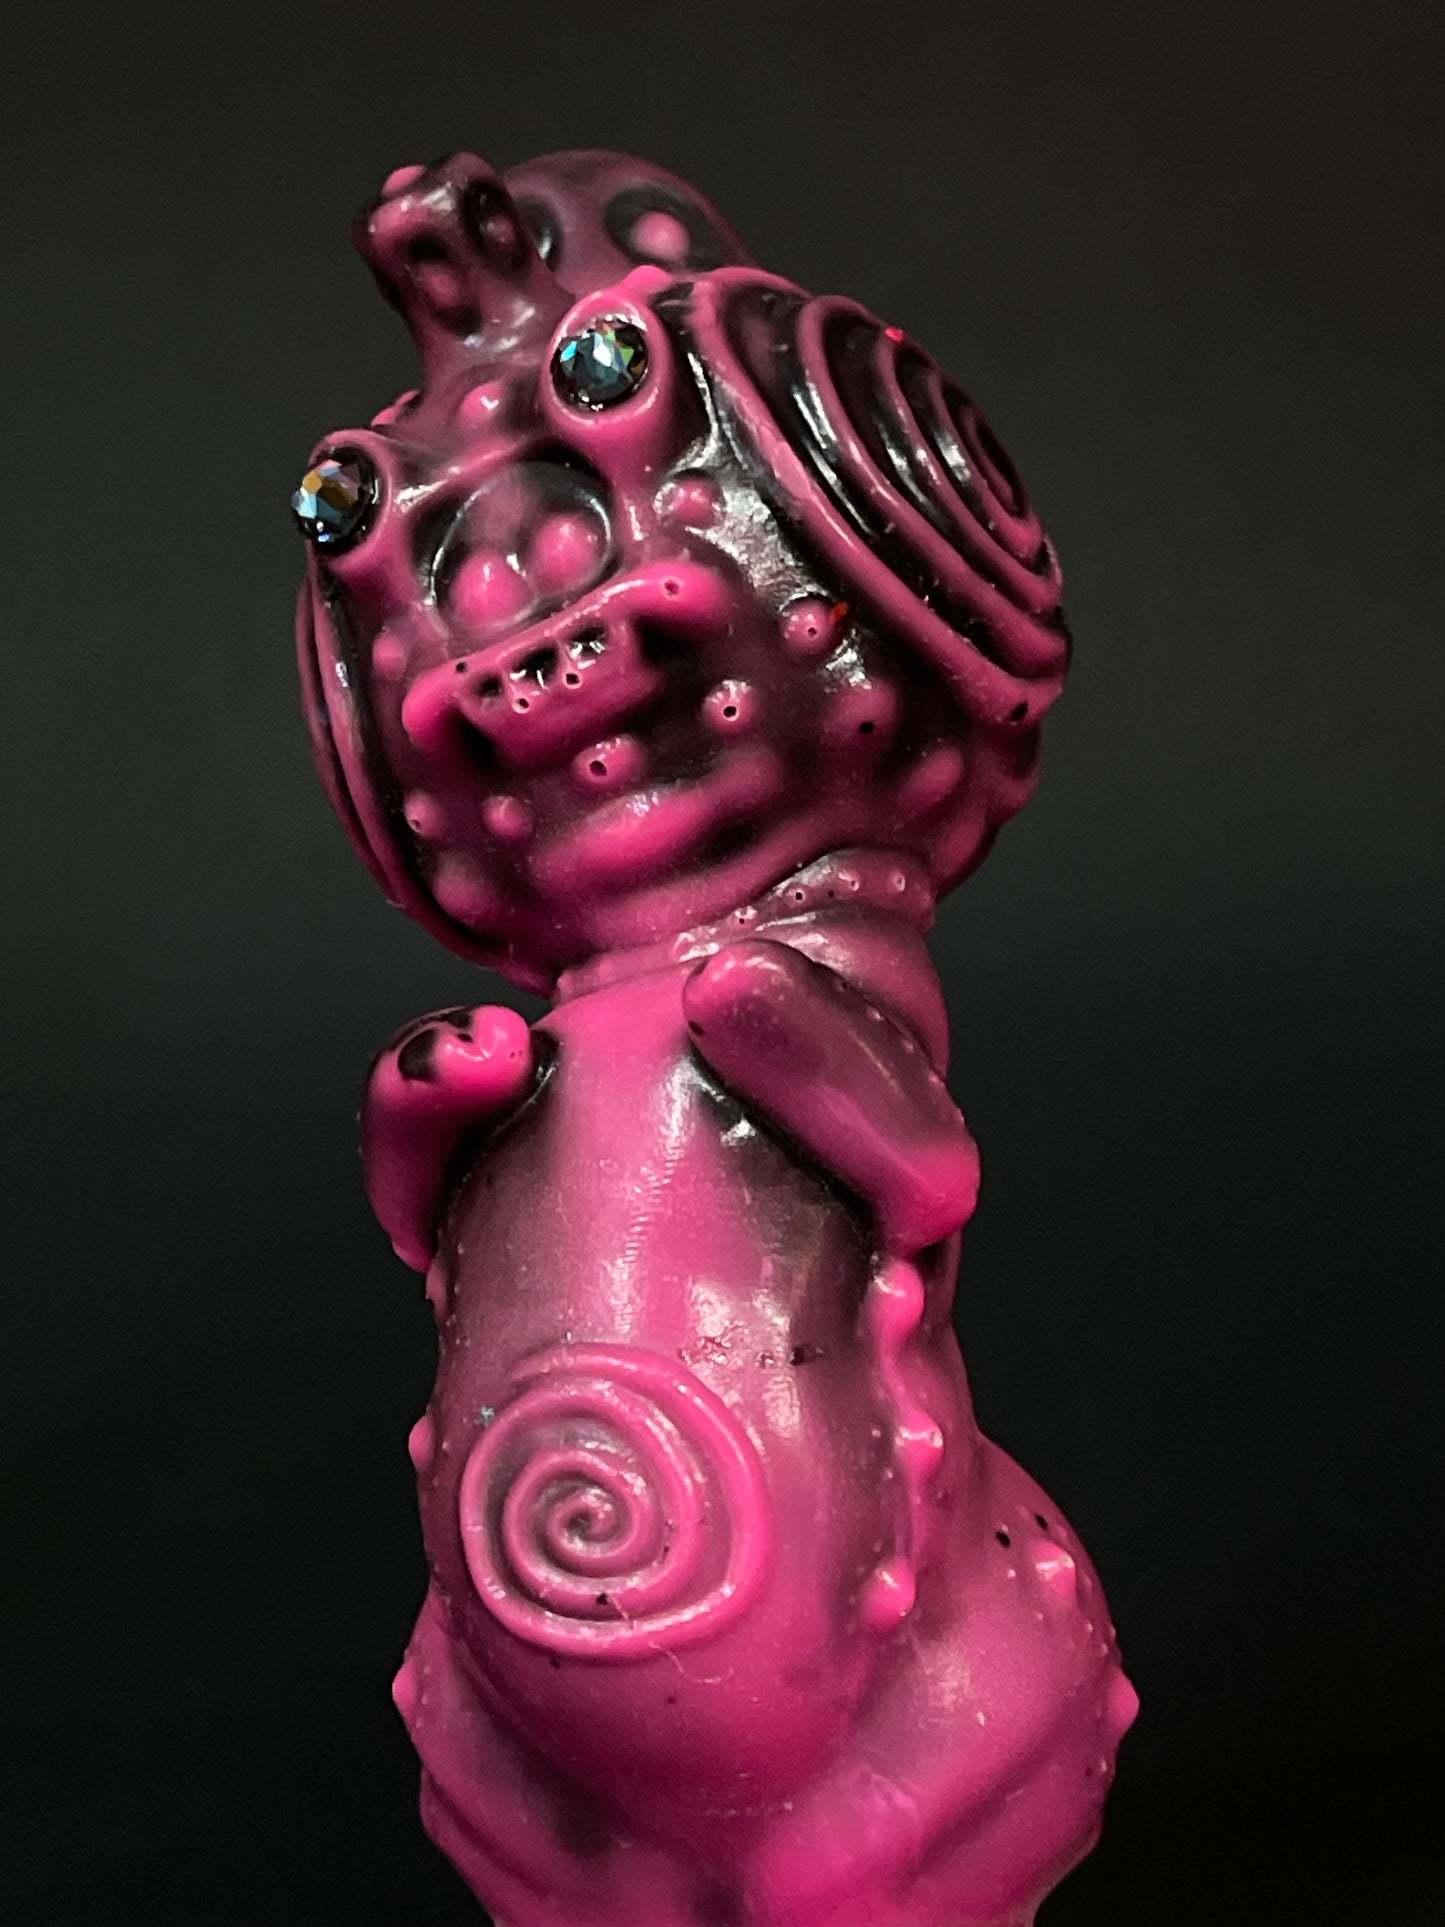 Robot Twisty Pig: Oil Slick Survivor